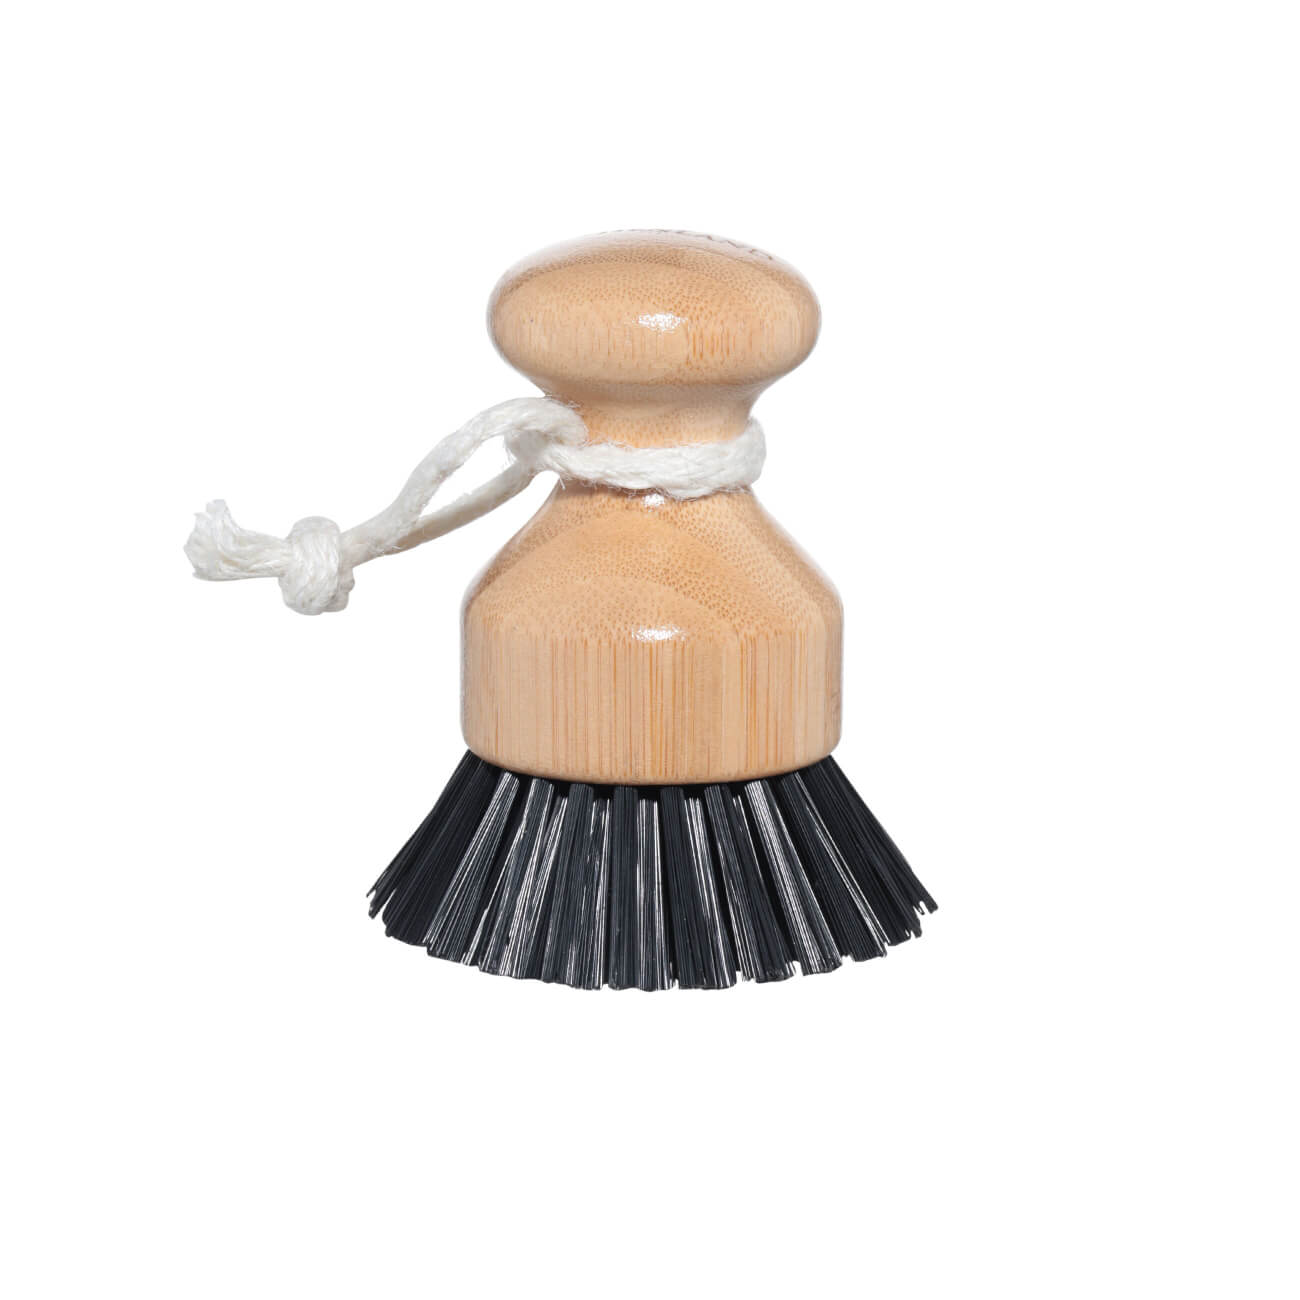 Щетка для мытья посуды, 7 см, бамбук/пластик, черная, Black clean зубная щетка детская little mr бамбук 14 × 2 × 2 см